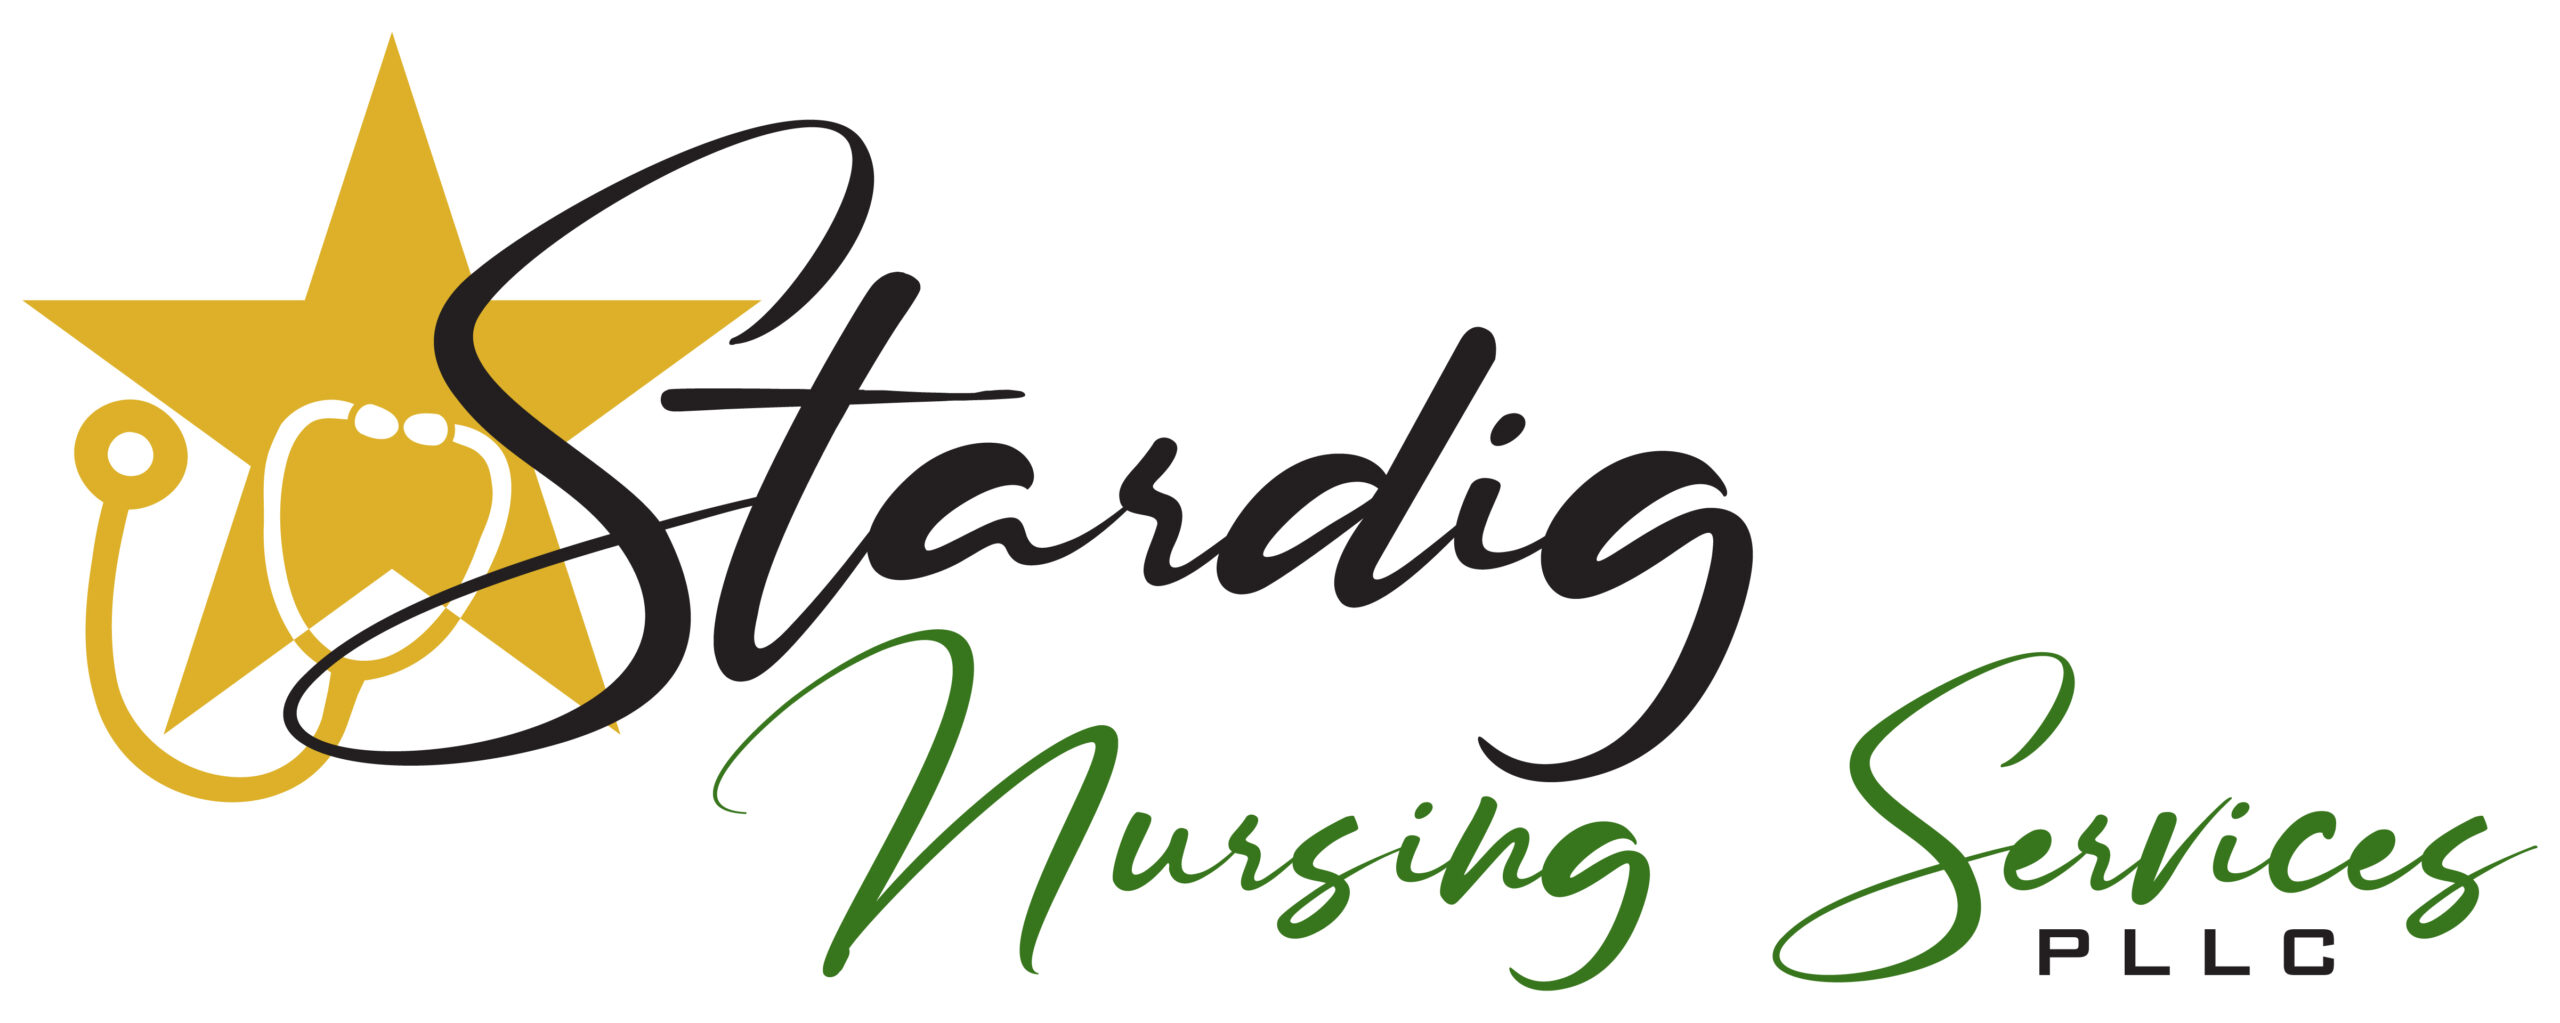 Stardig Nursing Services, PLLC